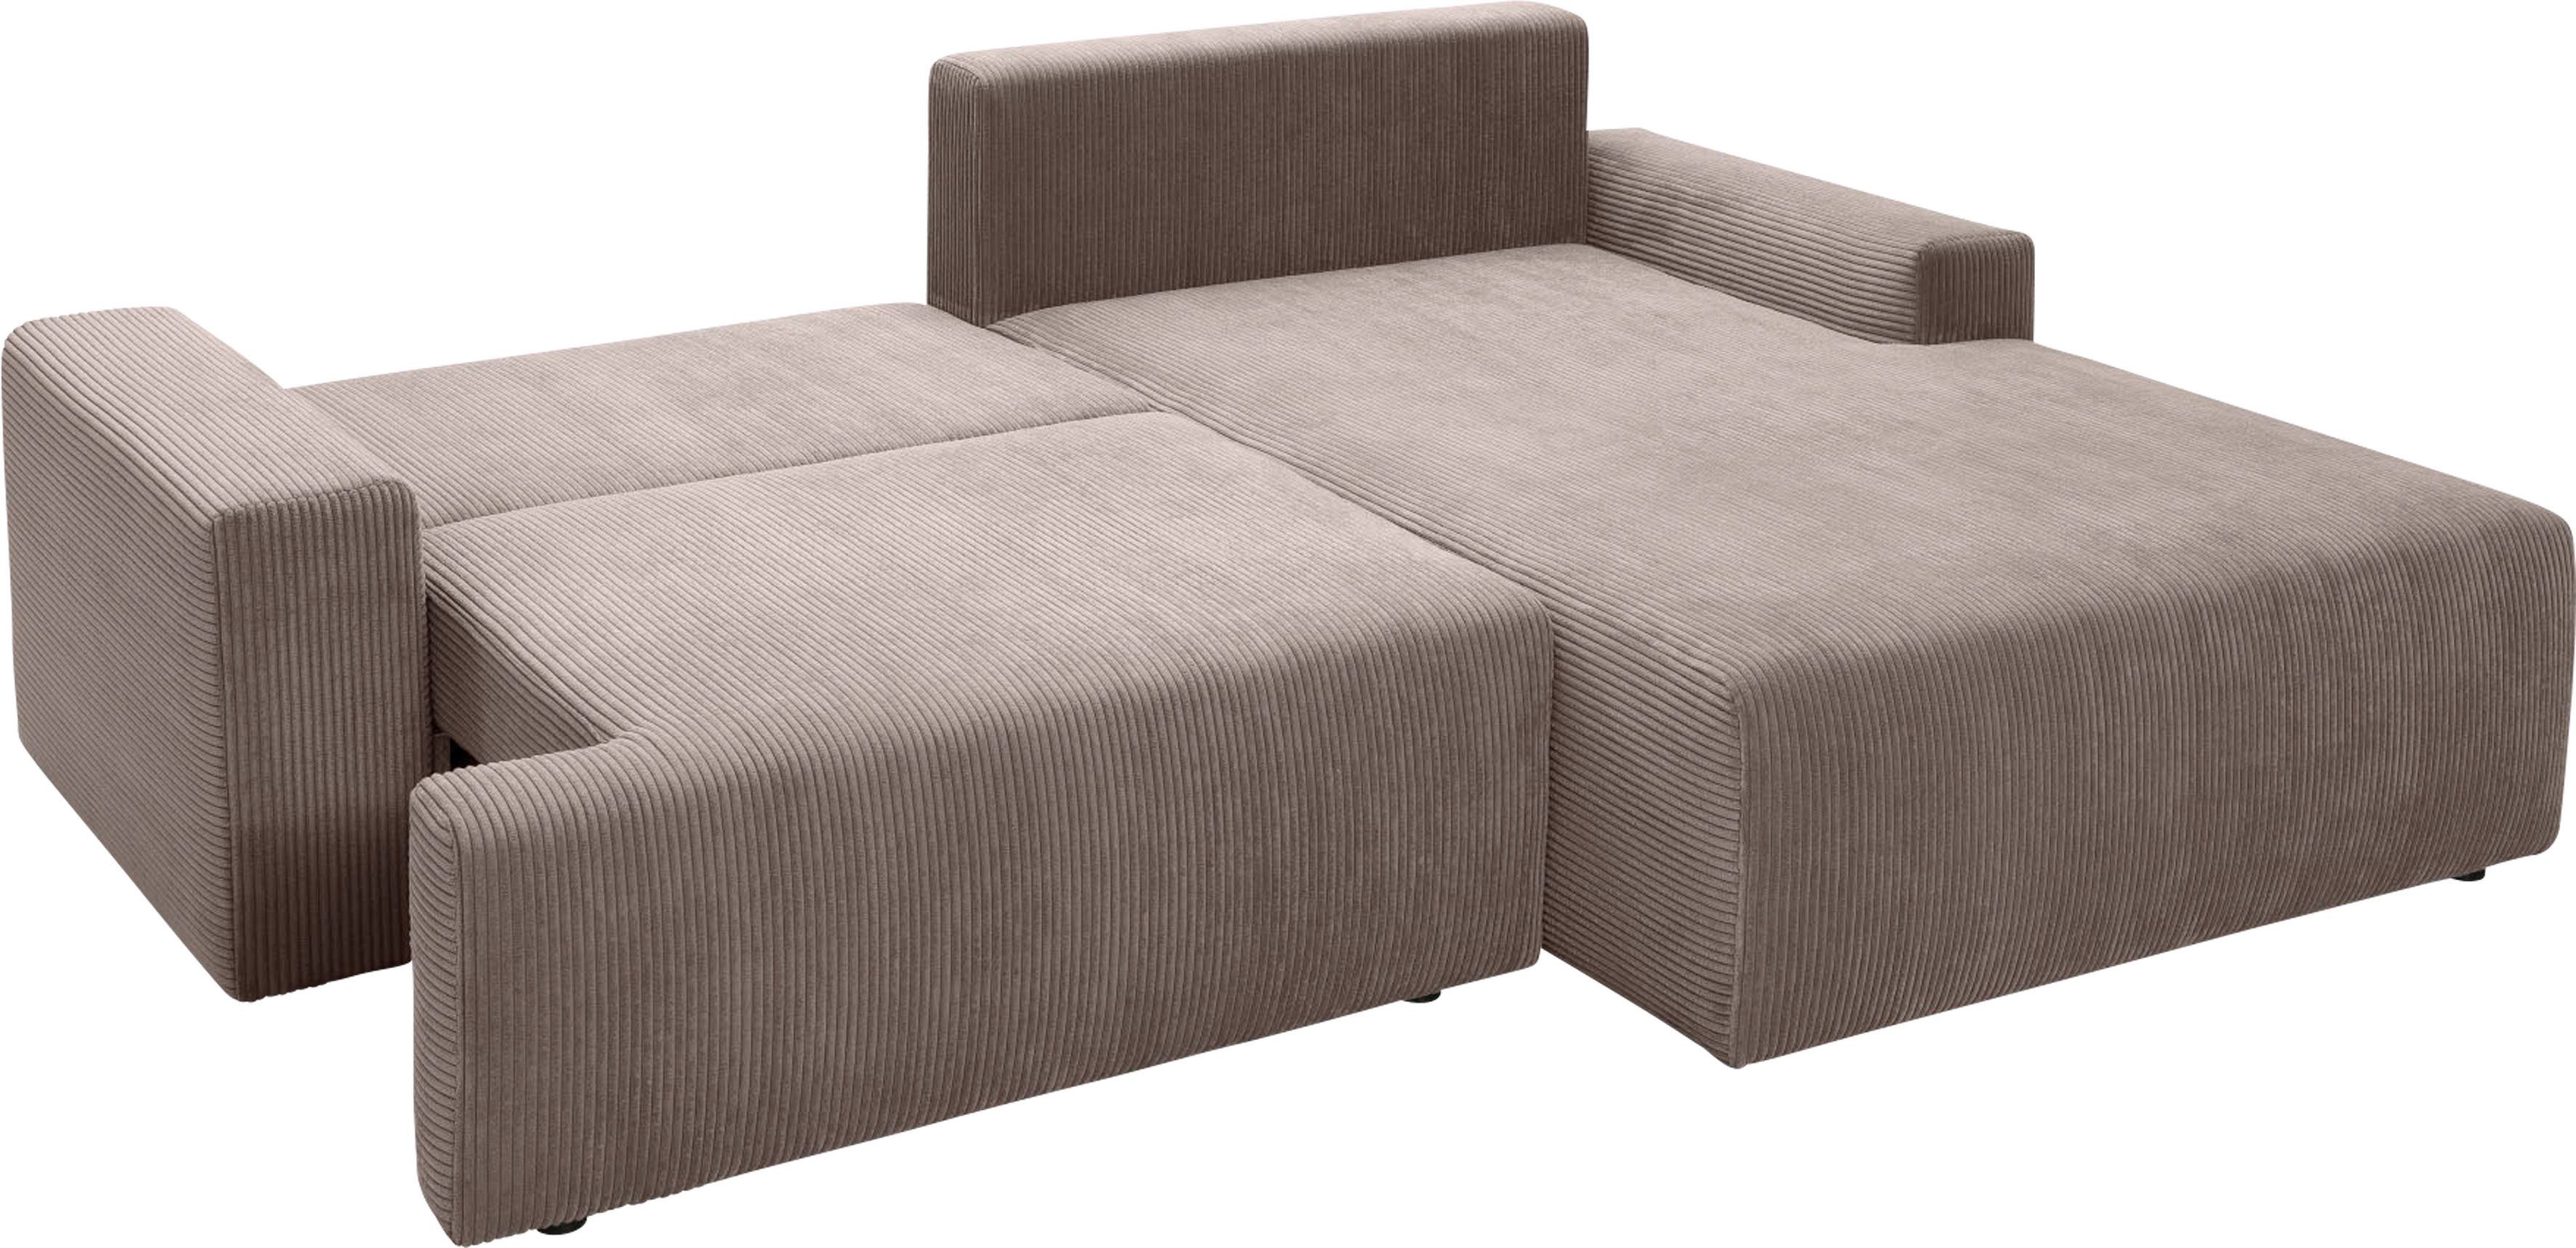 exxpo - inklusive sofa in cappuccino Bettfunktion fashion Bettkasten verschiedenen Cord-Farben und Orinoko, Ecksofa